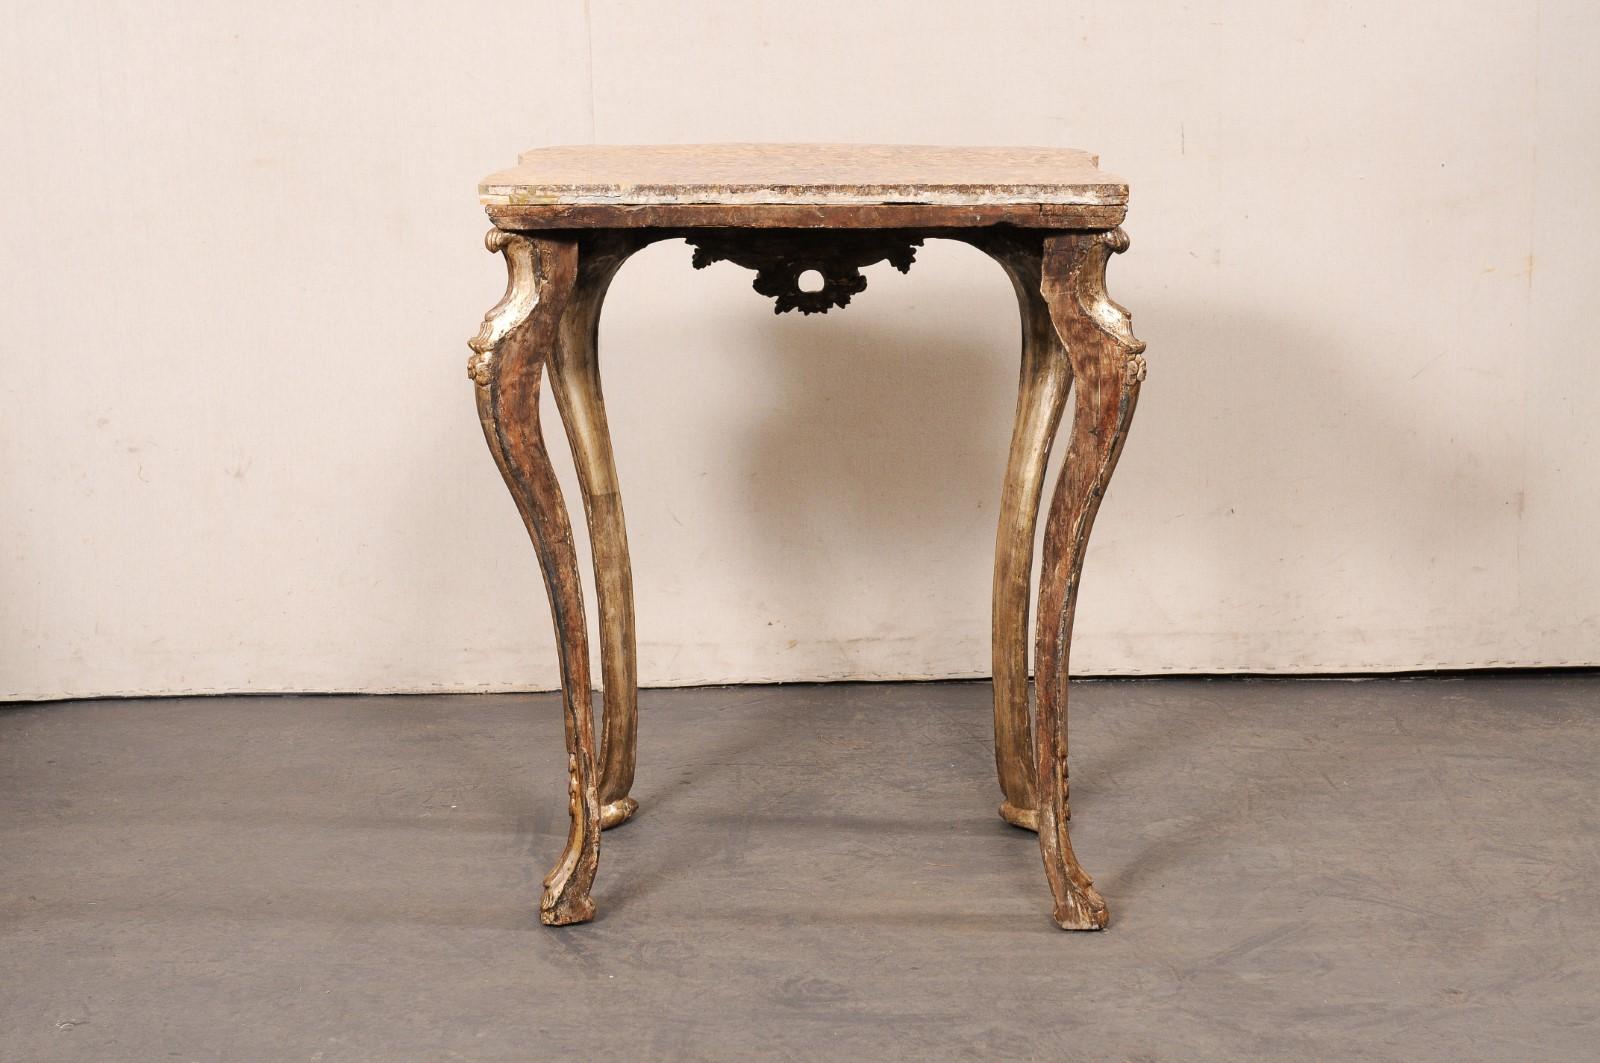 Italian Period Rococo Ornate Accent Table w/its Original Finish & Marble Top For Sale 3